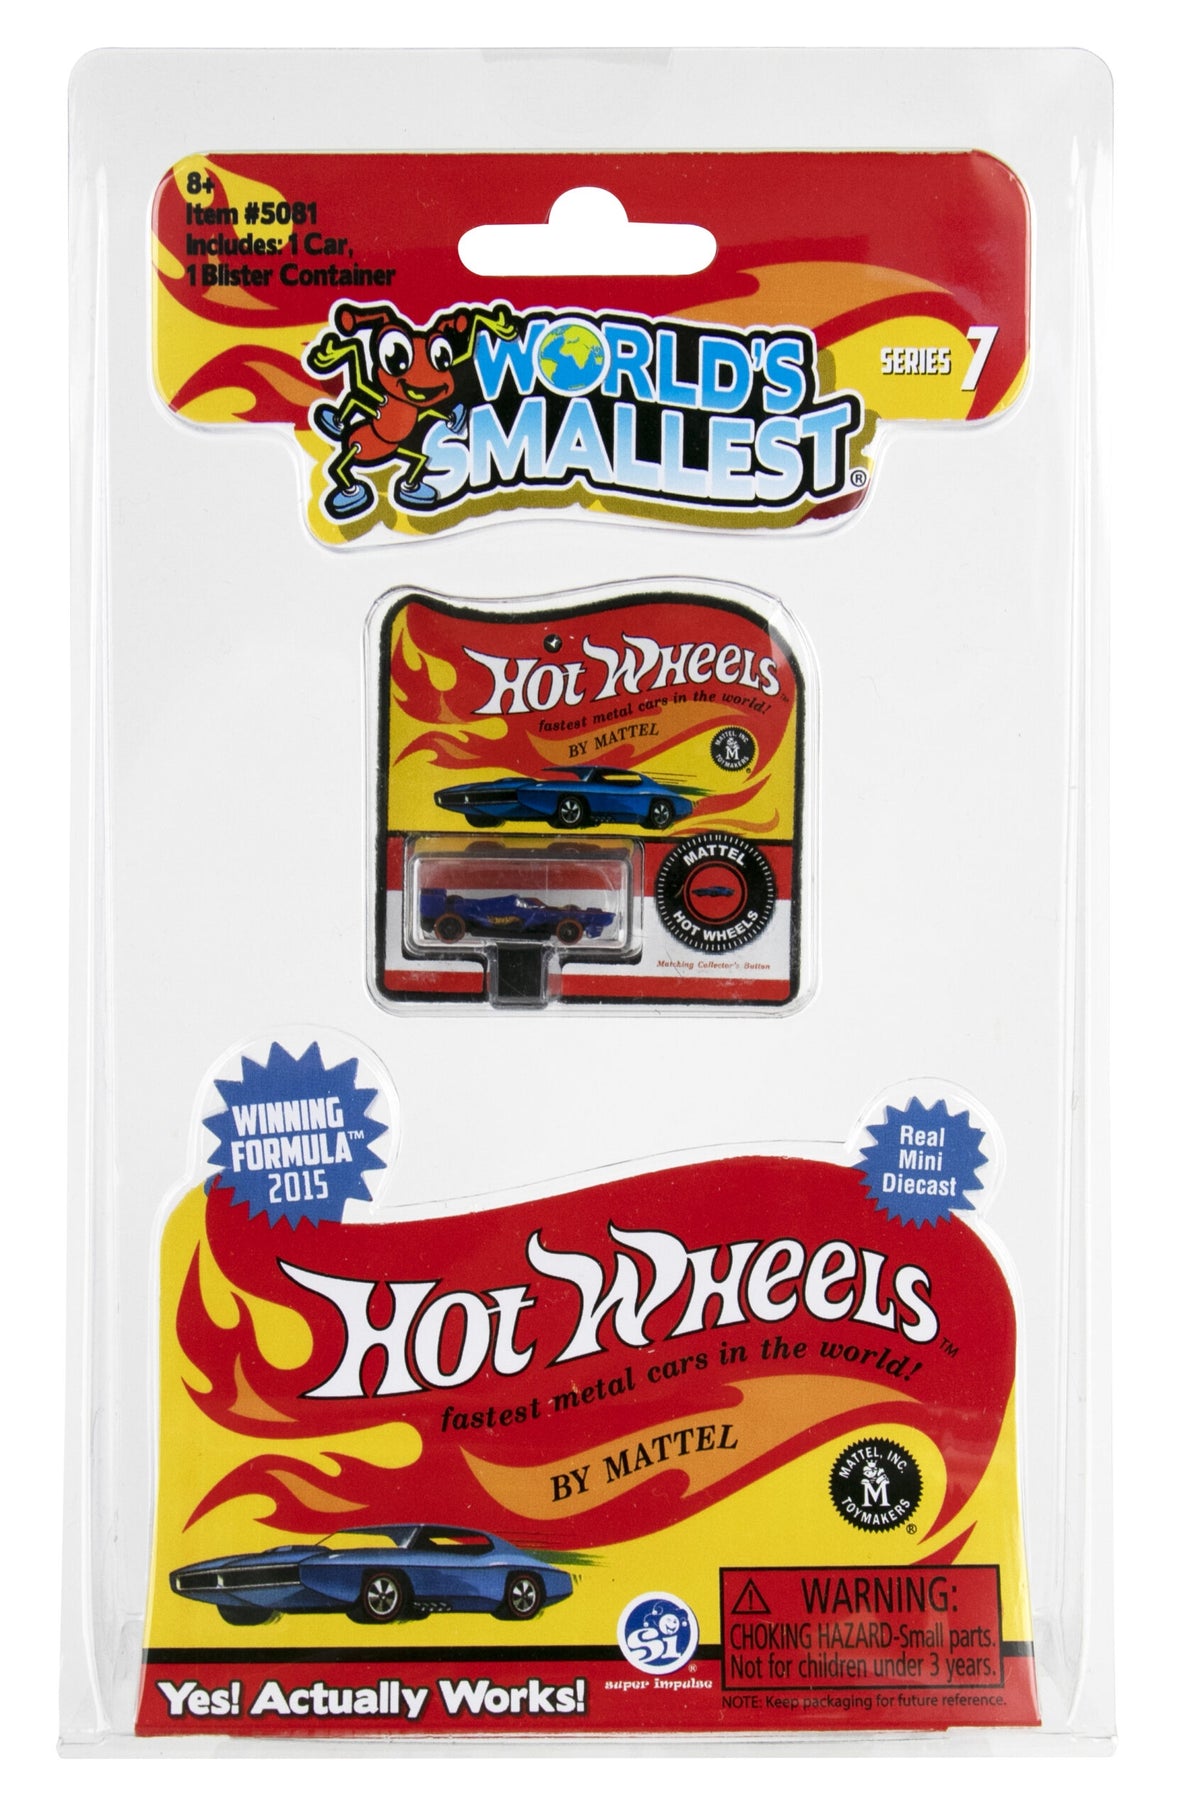 World&#39;s Smallest: Hot Wheels Series 7